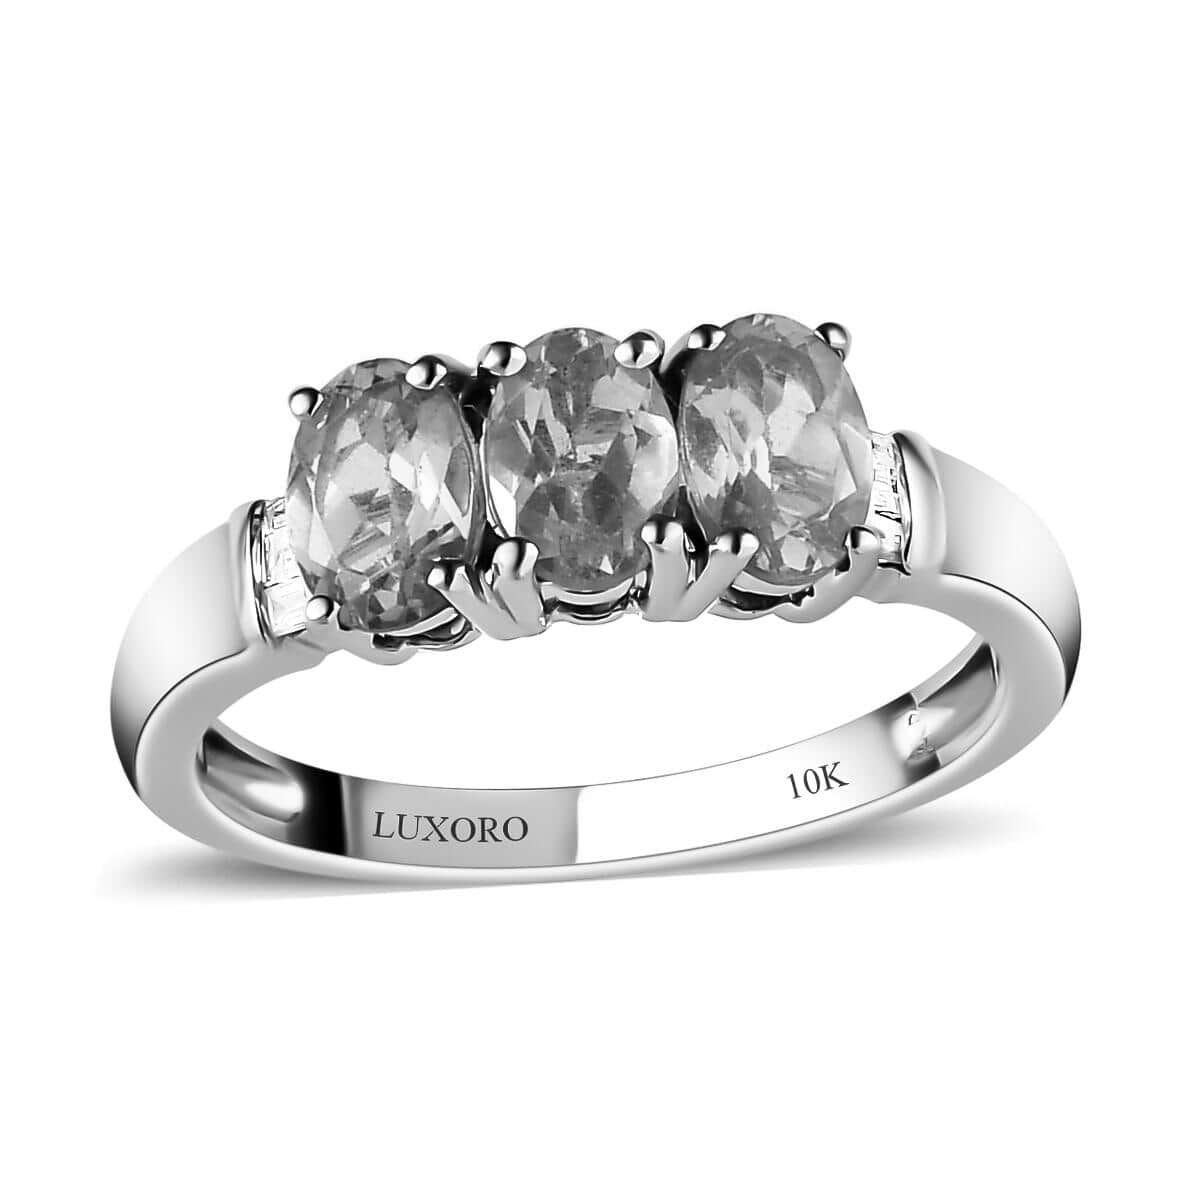 LUXORO 10K White Gold Premium Madagascar Paraiba Apatite, Diamond Trilogy Ring (Size 10.0) (2.50 g) 1.47 ctw image number 0